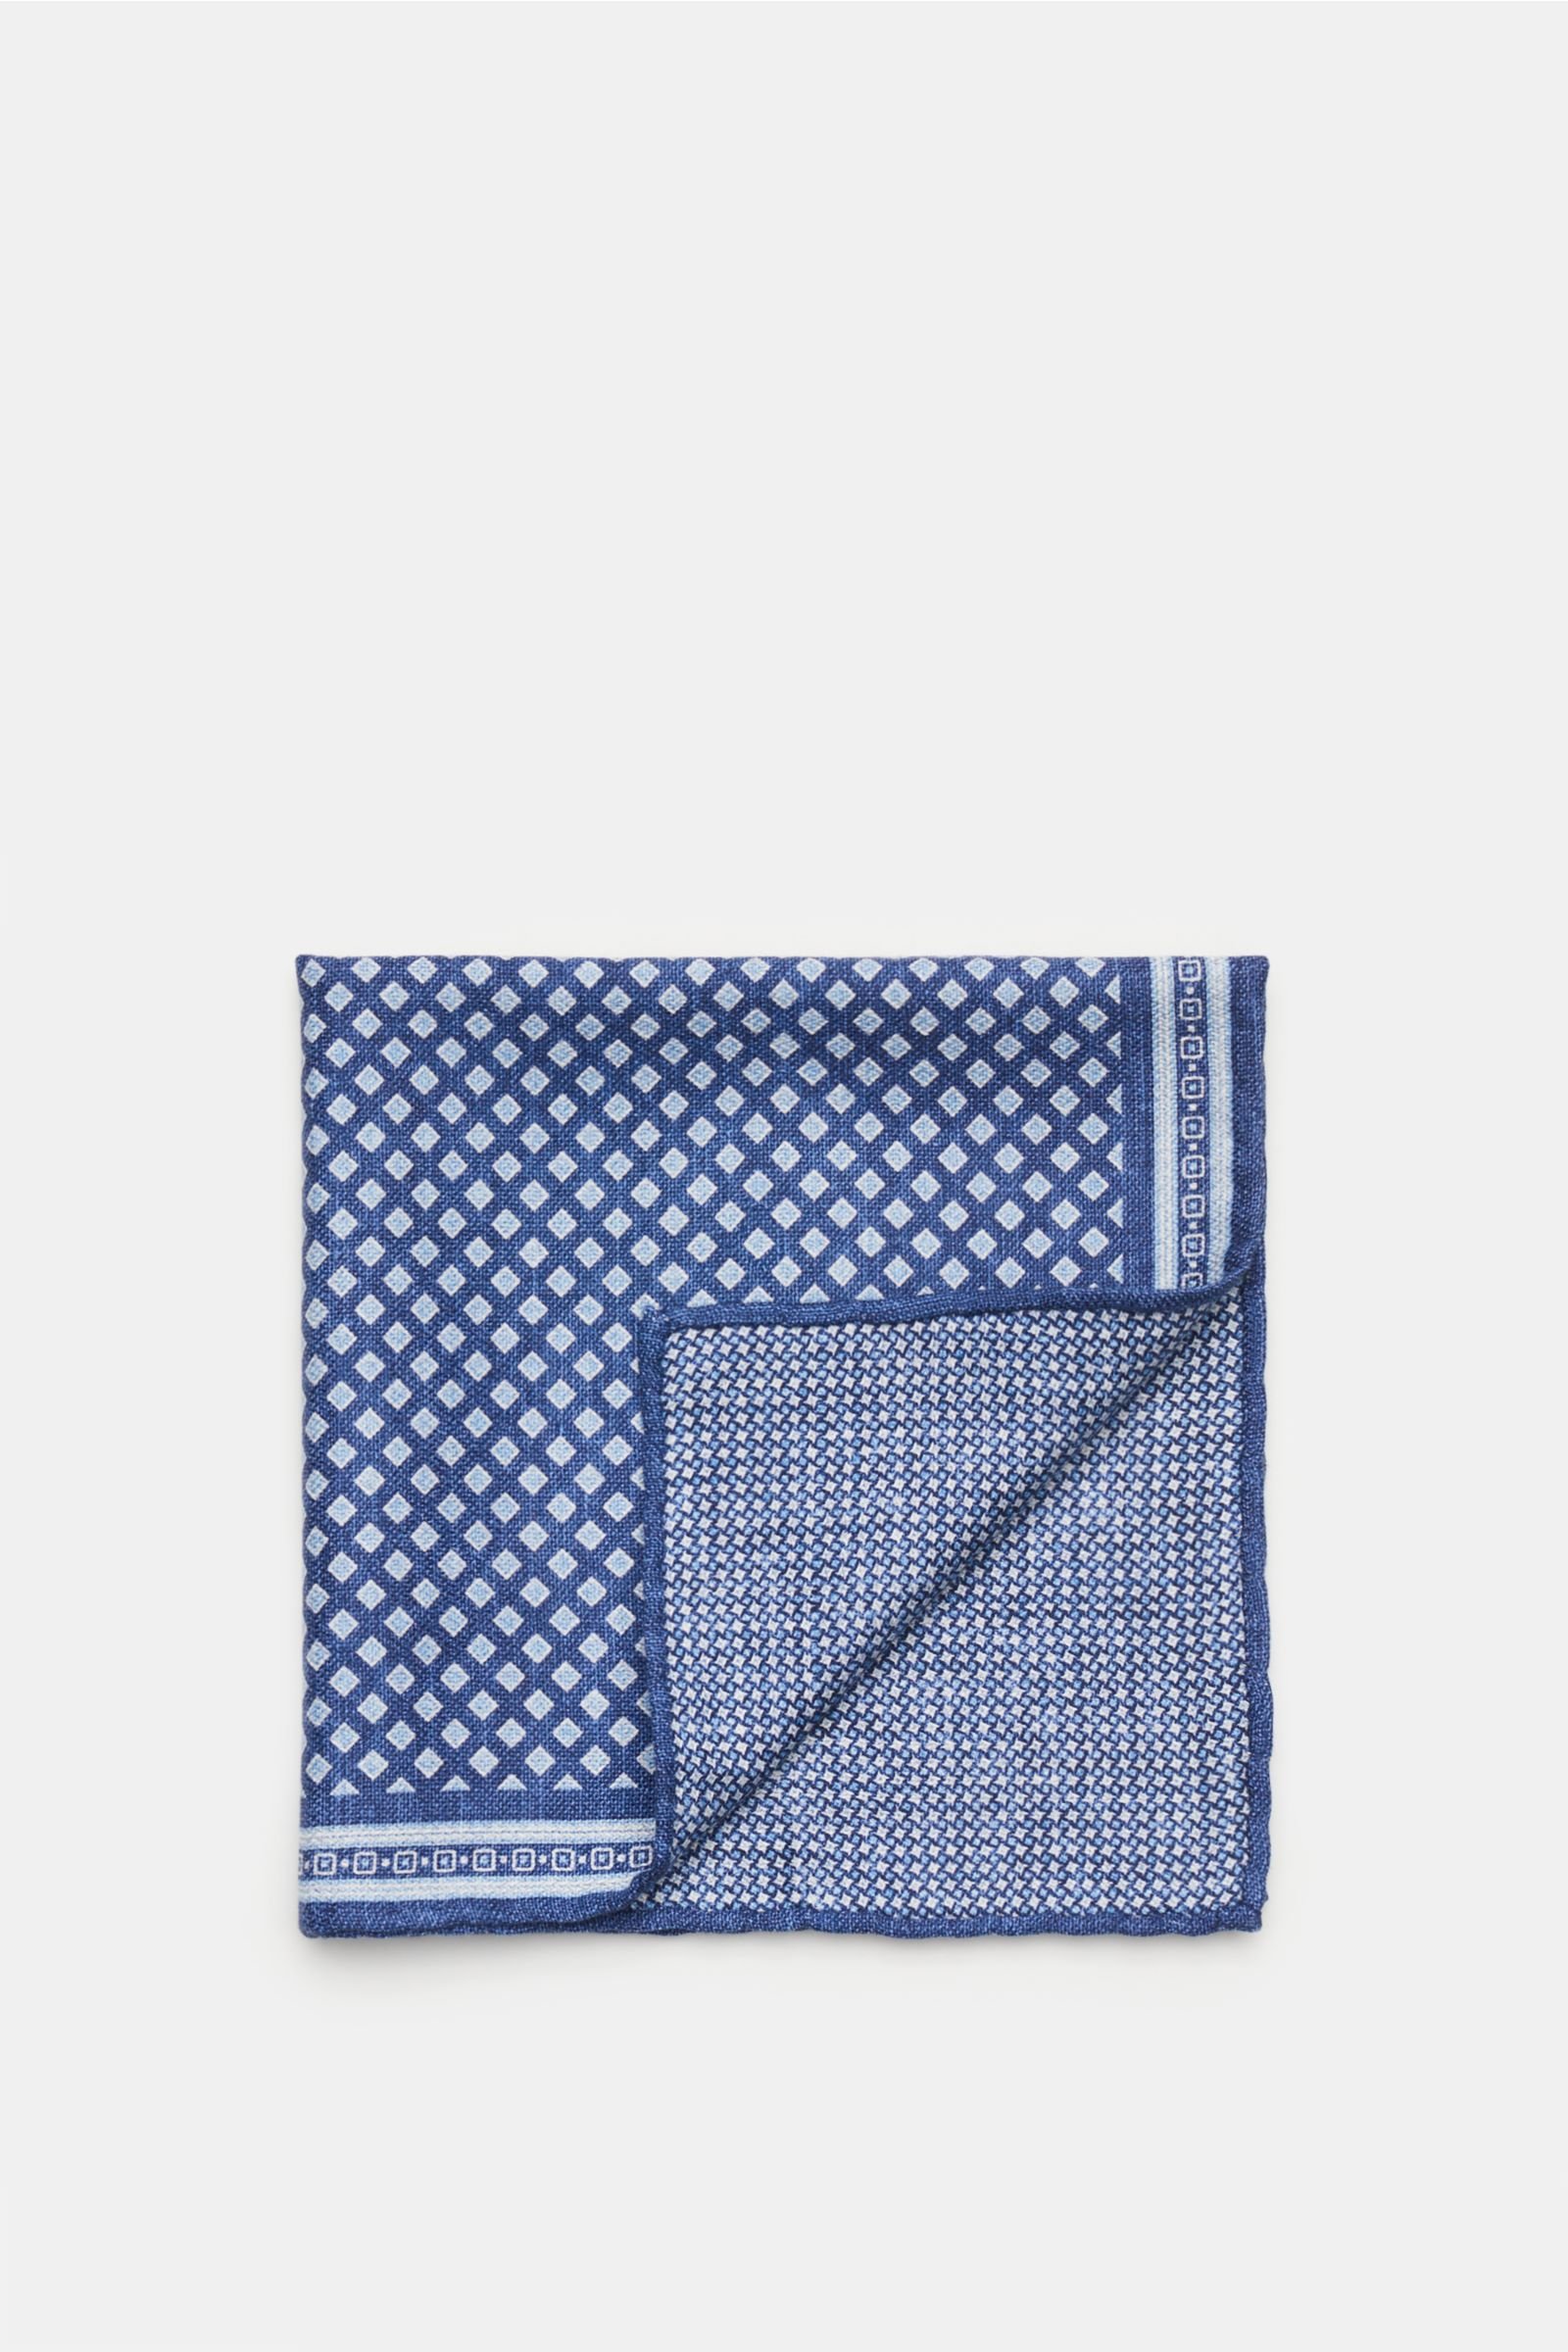 Pocket square navy/light blue patterned